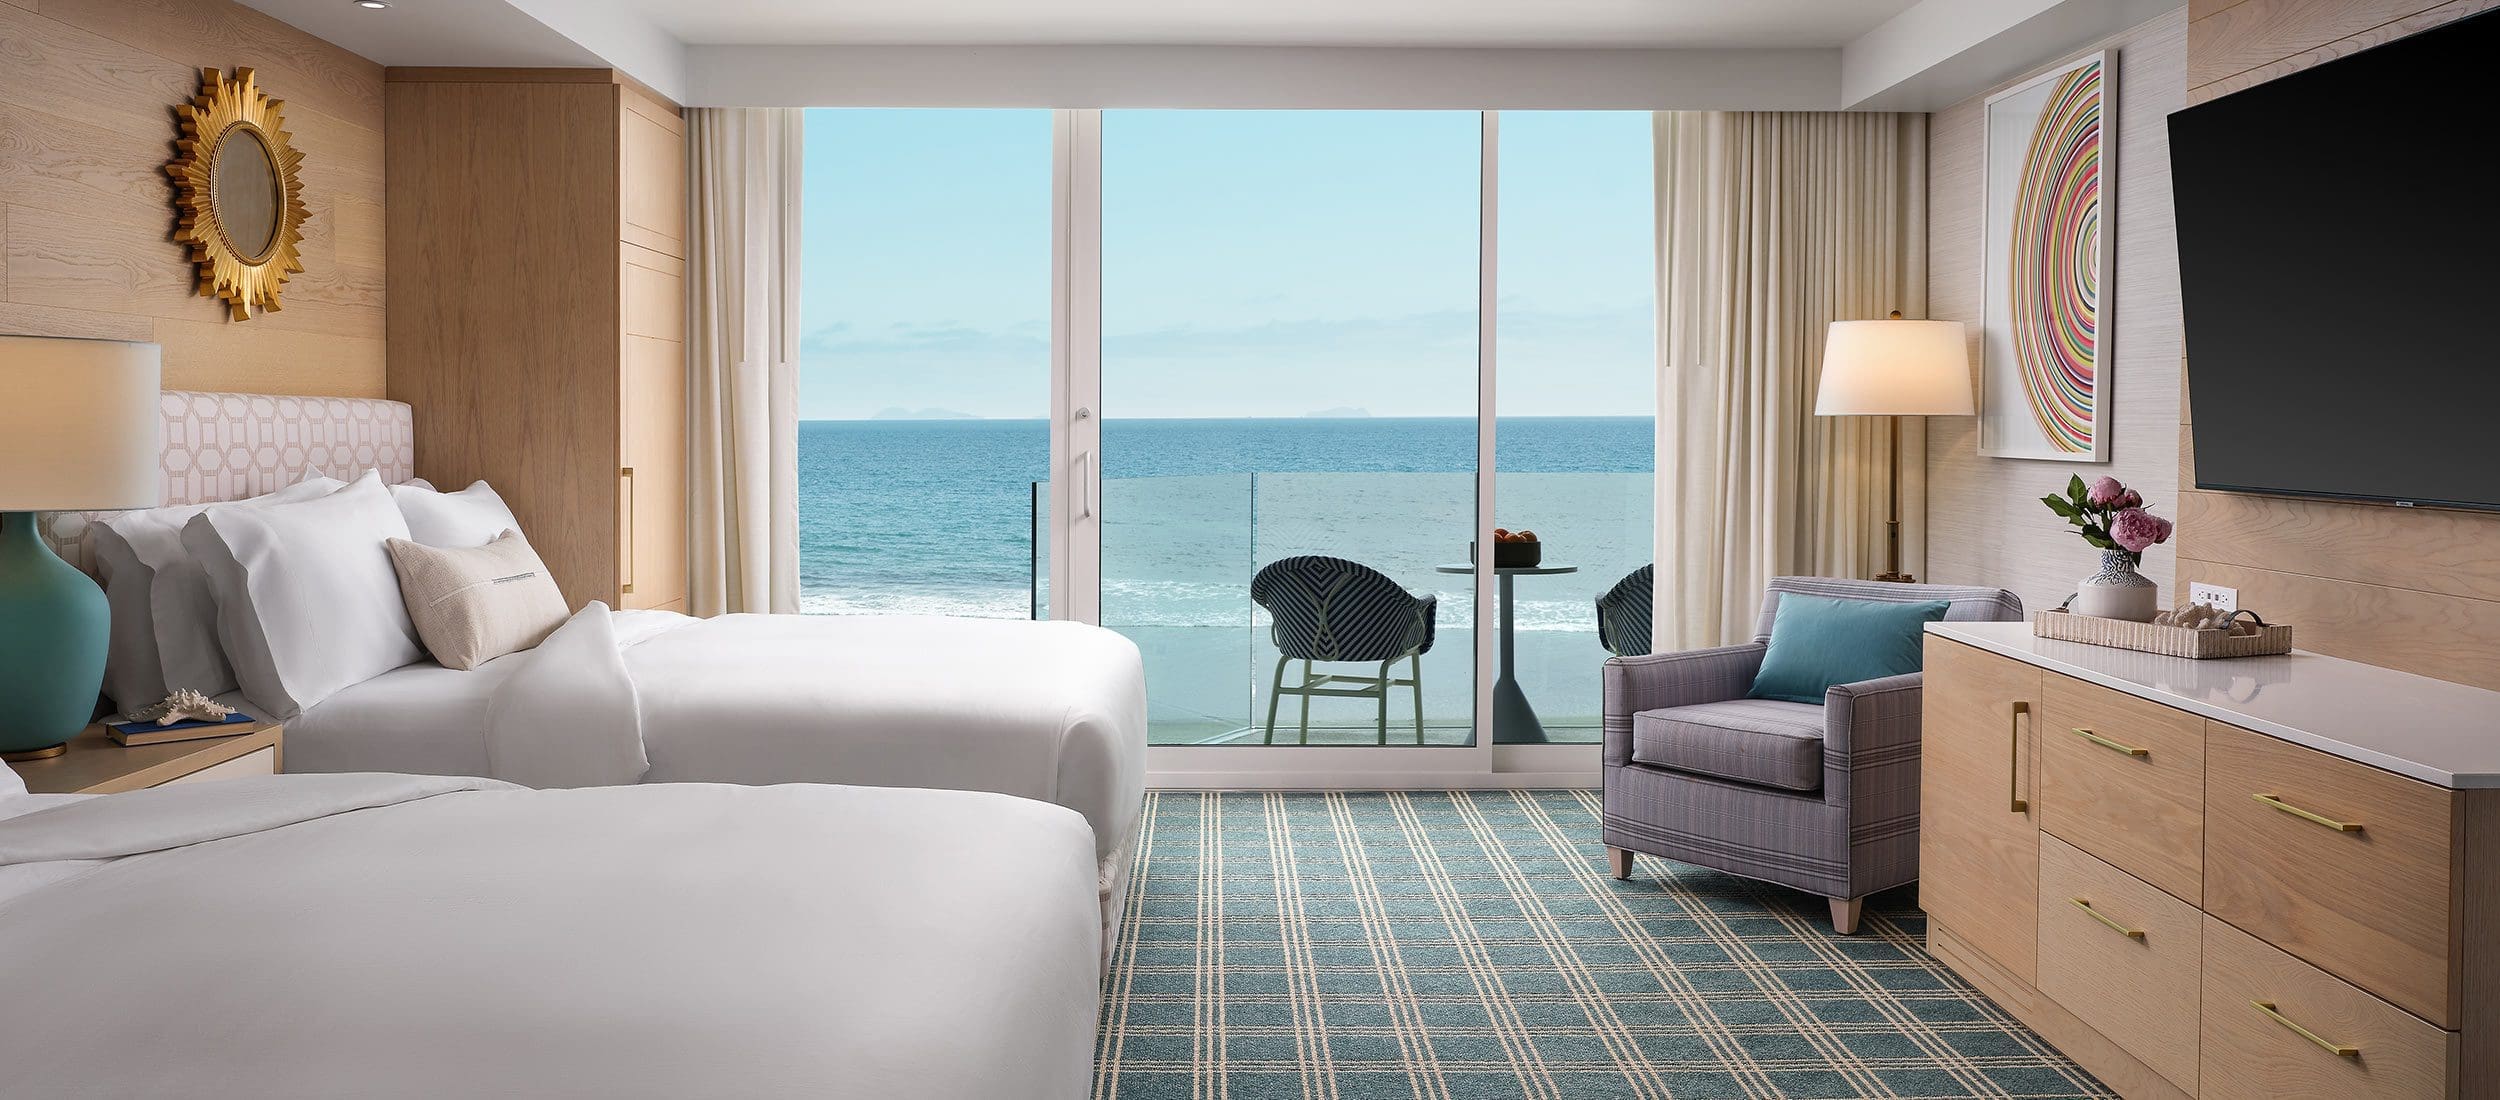 The Views Oceanfront Room with 2 Queen Beds